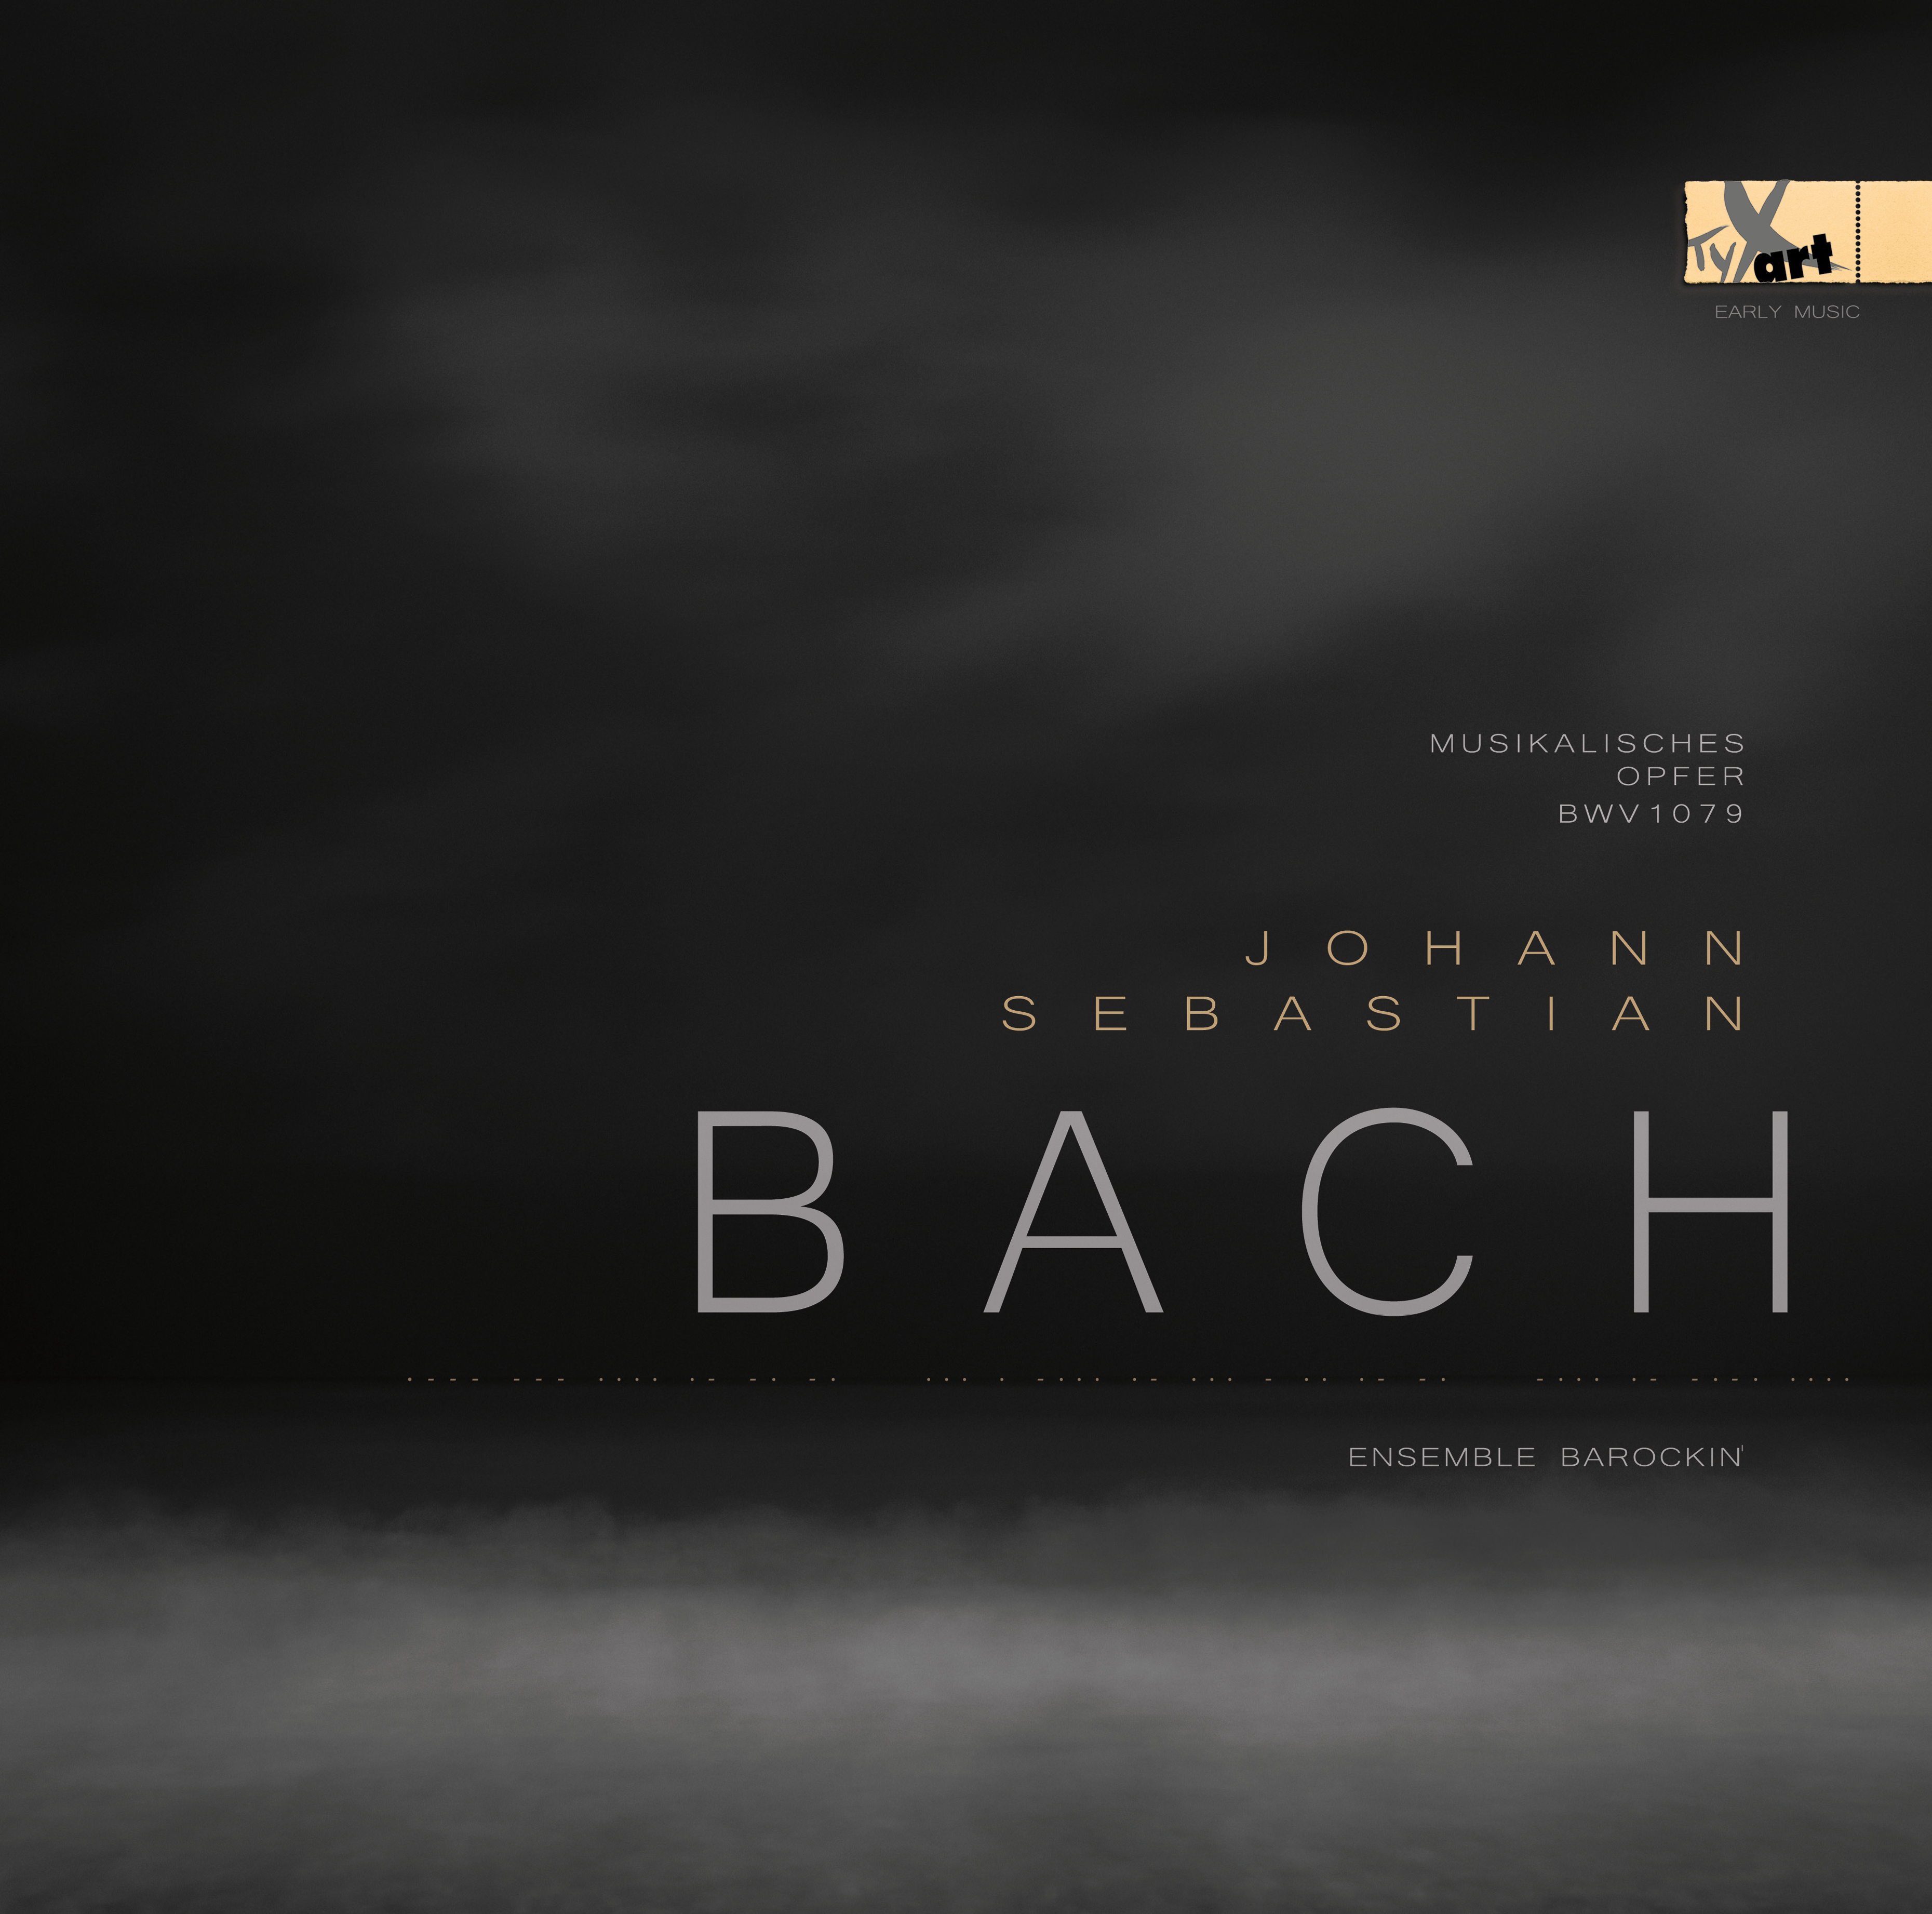 Bach - Musikalisches Opfer - Ensemble Barockin' - Vinyl